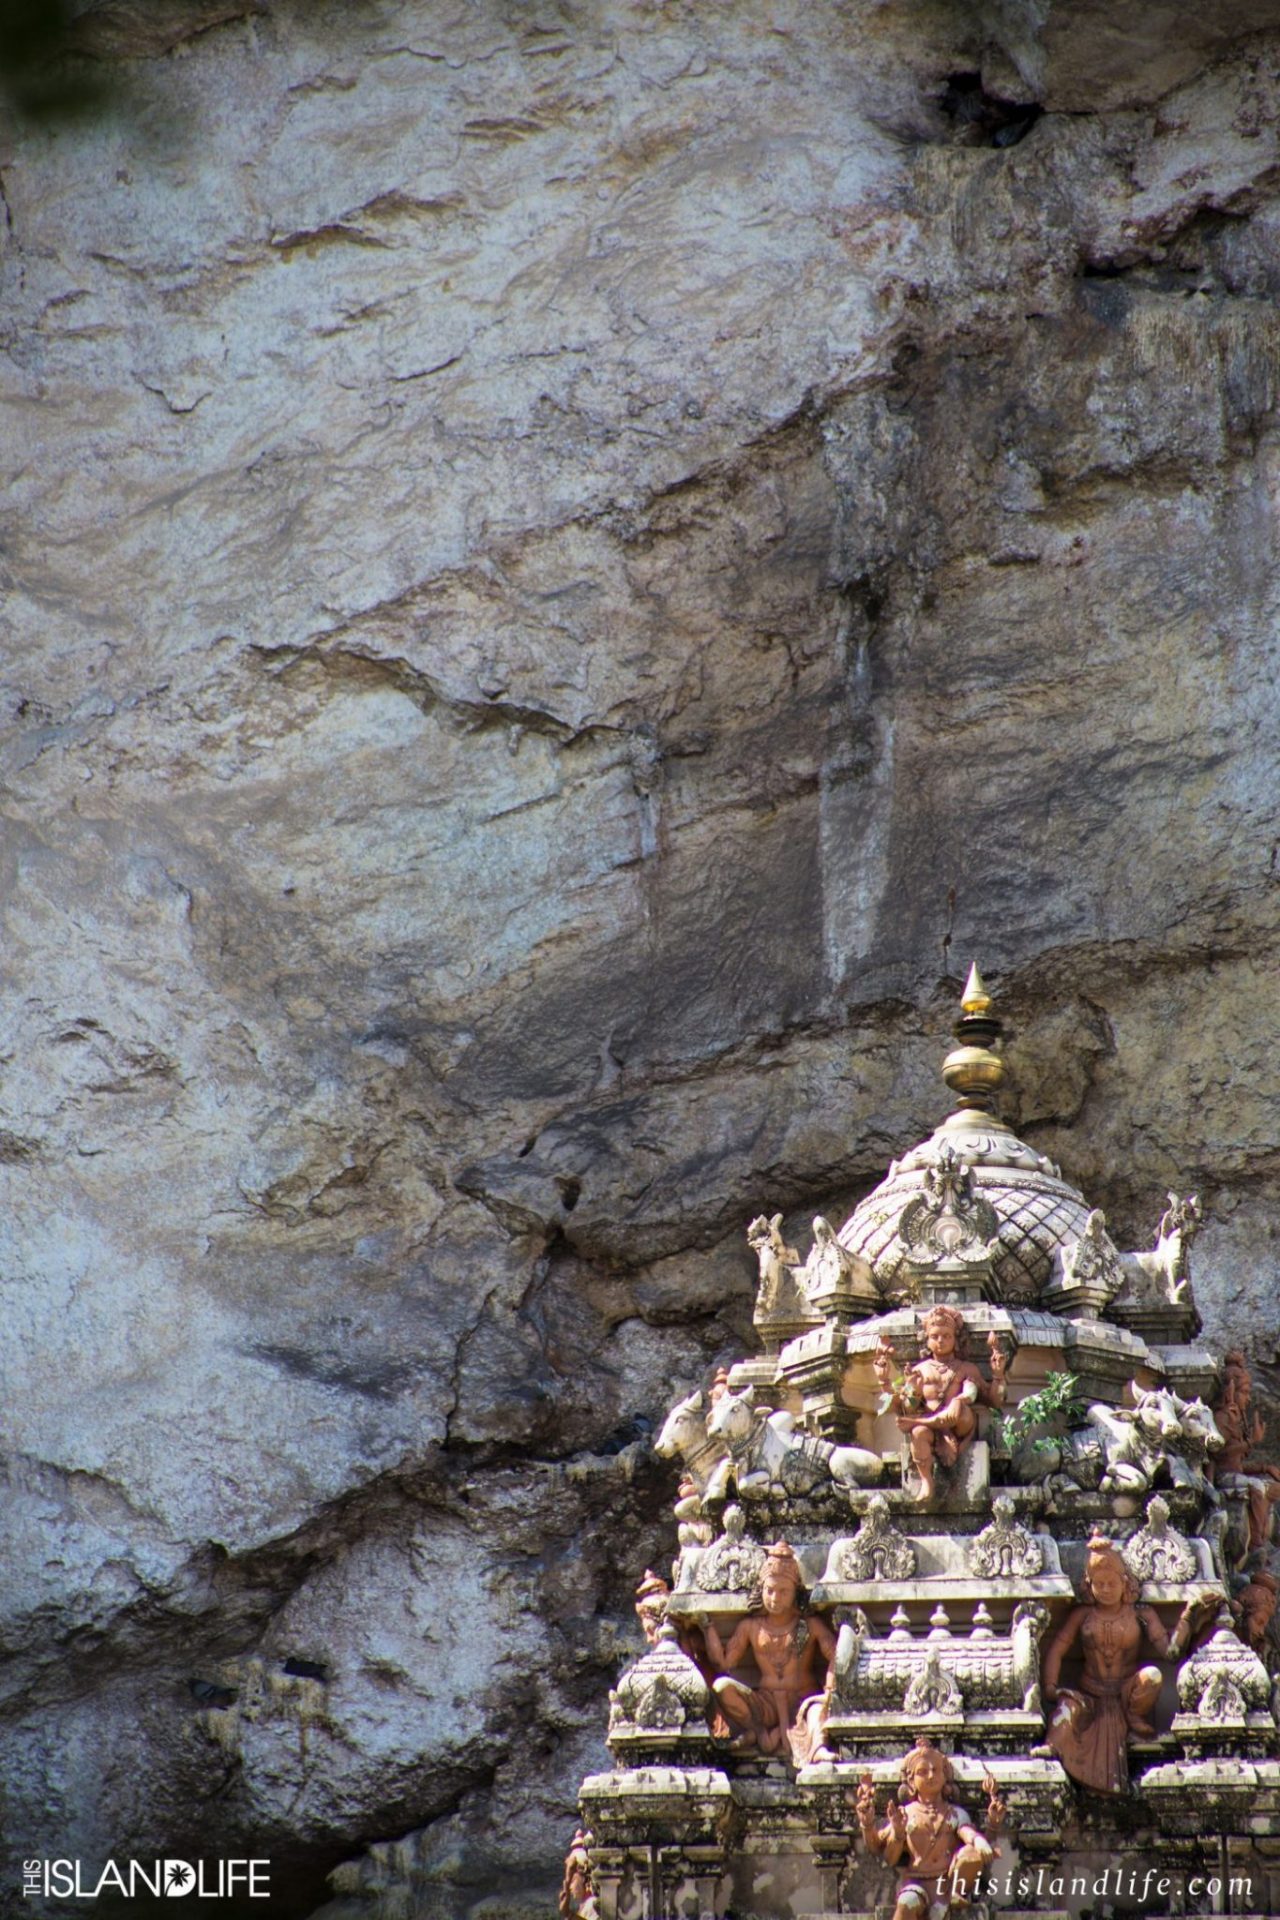 THIS ISLAND LIFE | Exploring the epic Batu Caves in Malaysia